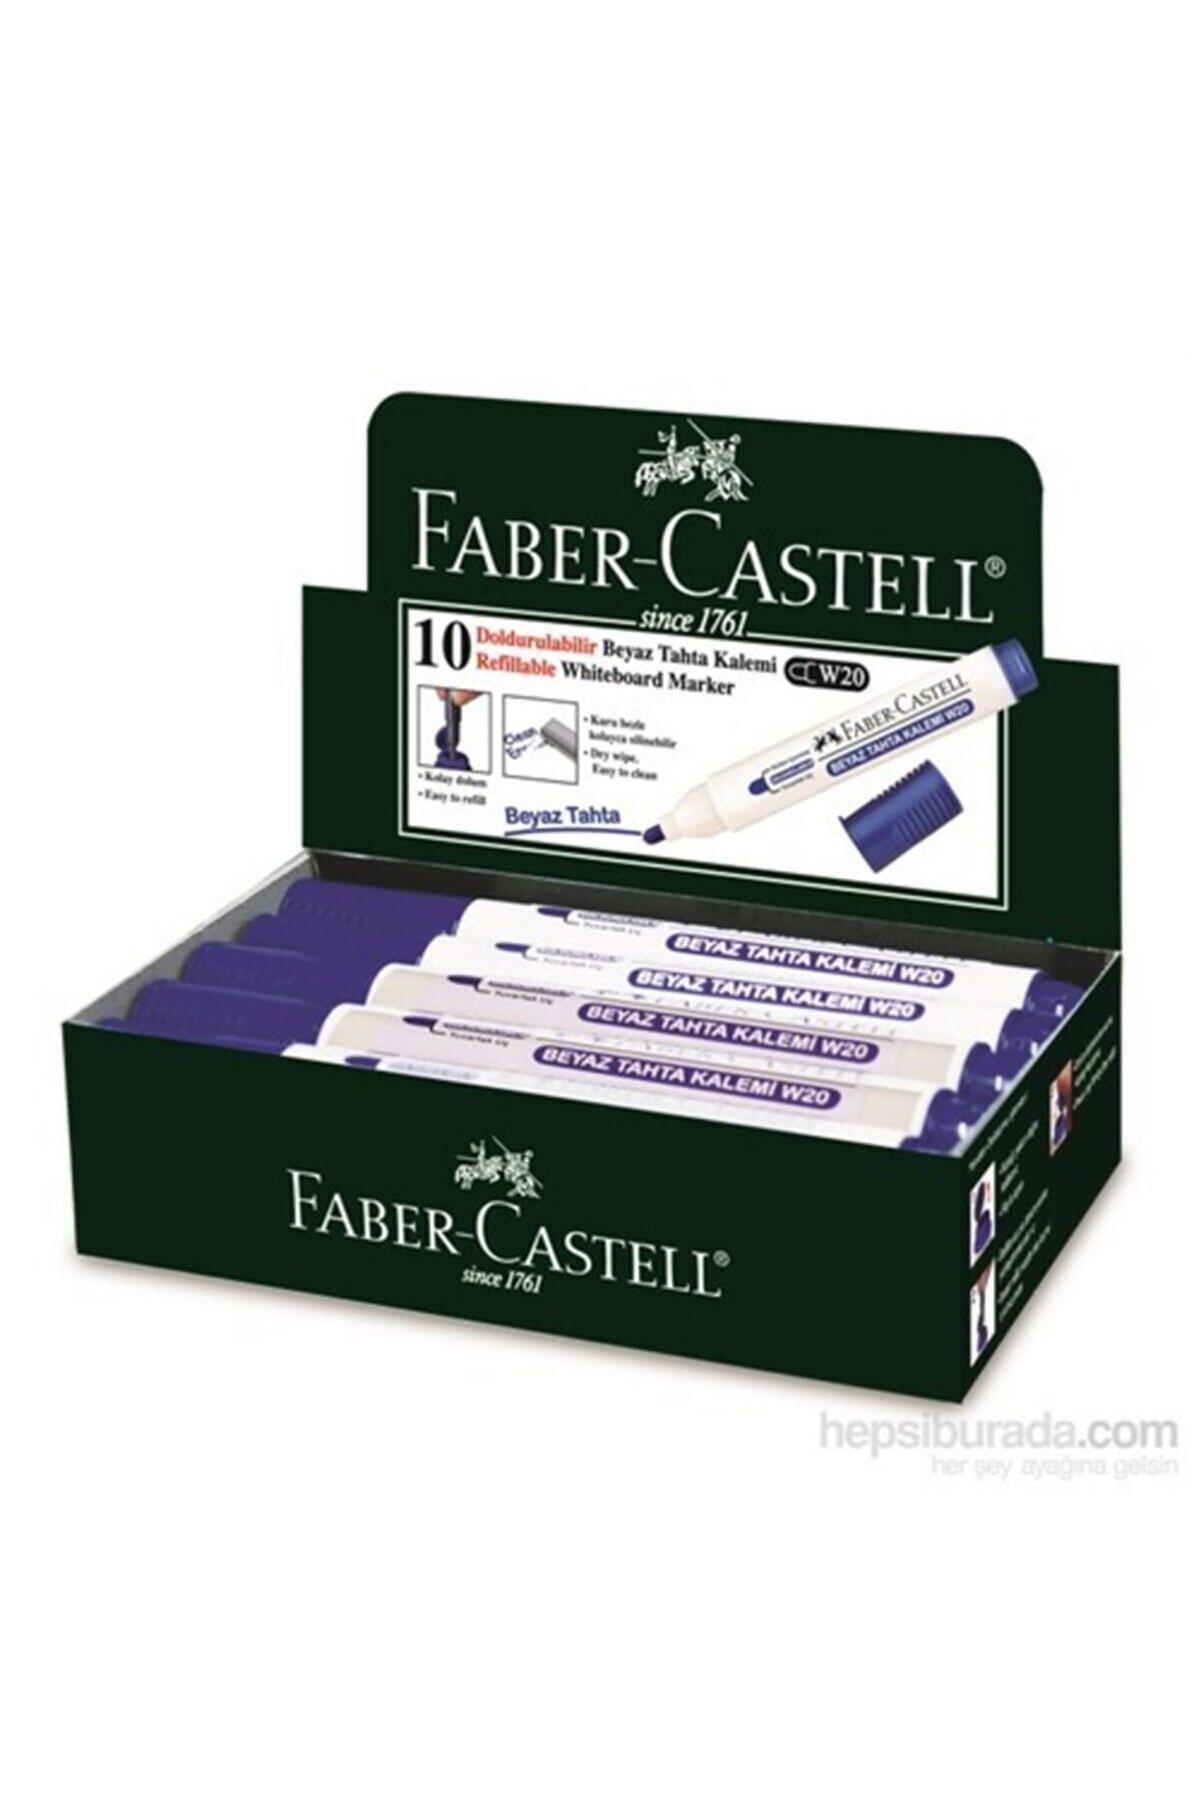 Faber Castell Faber-Castell Beyaz Tahta Kalemi W20 Mavi, 10'lu